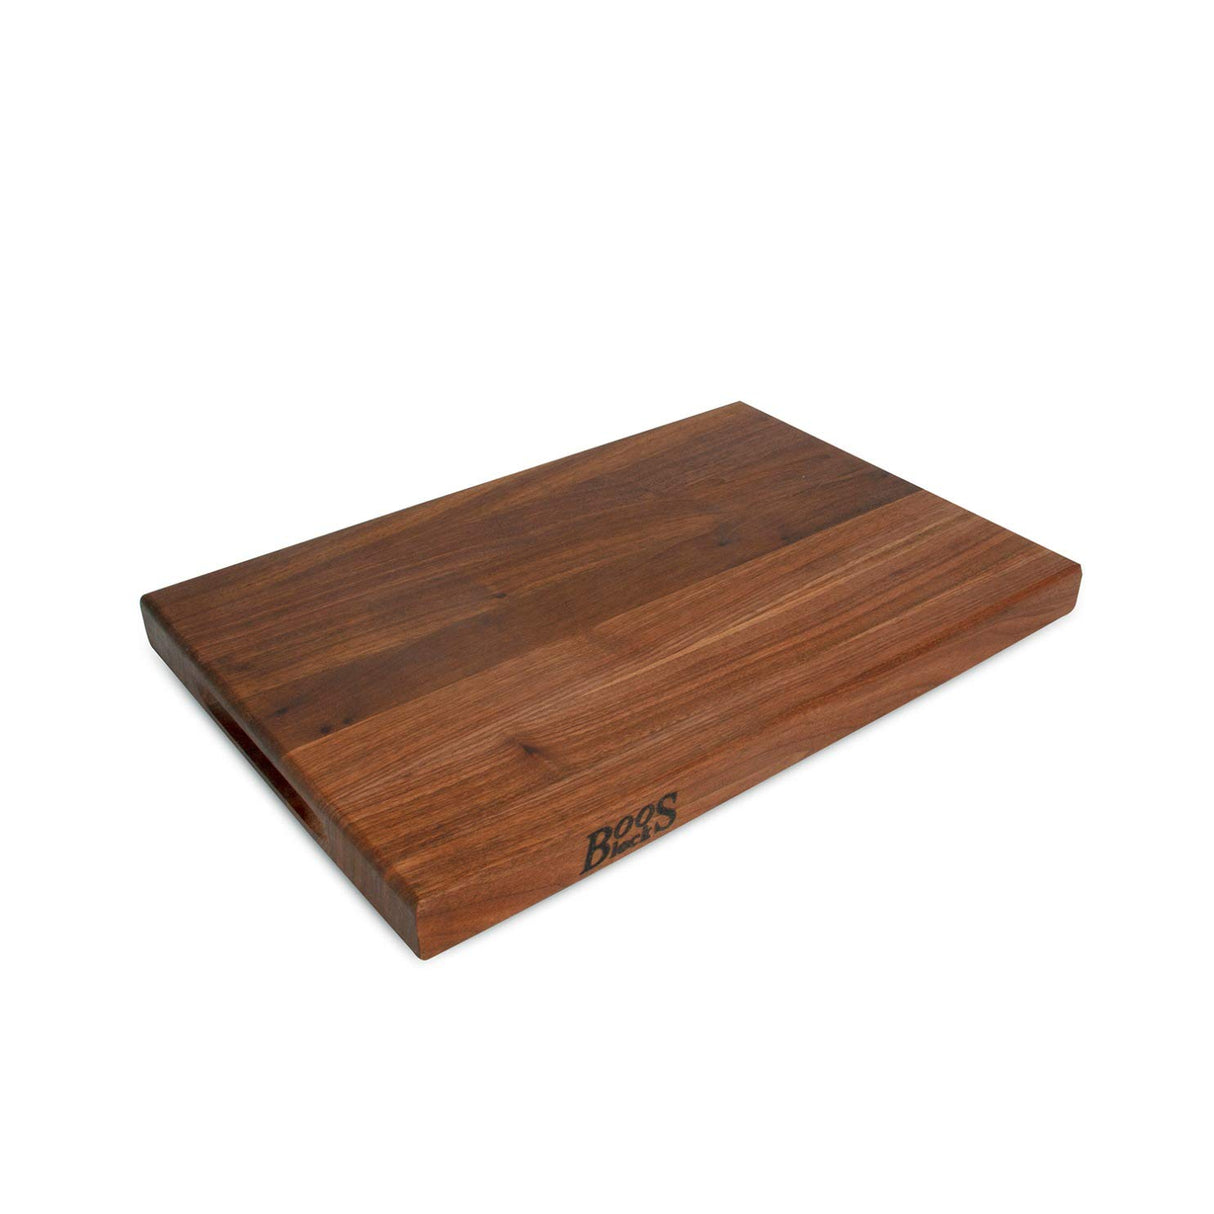 John Boos WAL-R01 Walnut Wood Cutting Board for Kitchen Prep, 1.5 Inch Thick, Edge Grain Rectangular Reversible Charcuterie Block, 18" x 12" 1.5" 18X12X1.5 WAL-EDGE GR-REV-